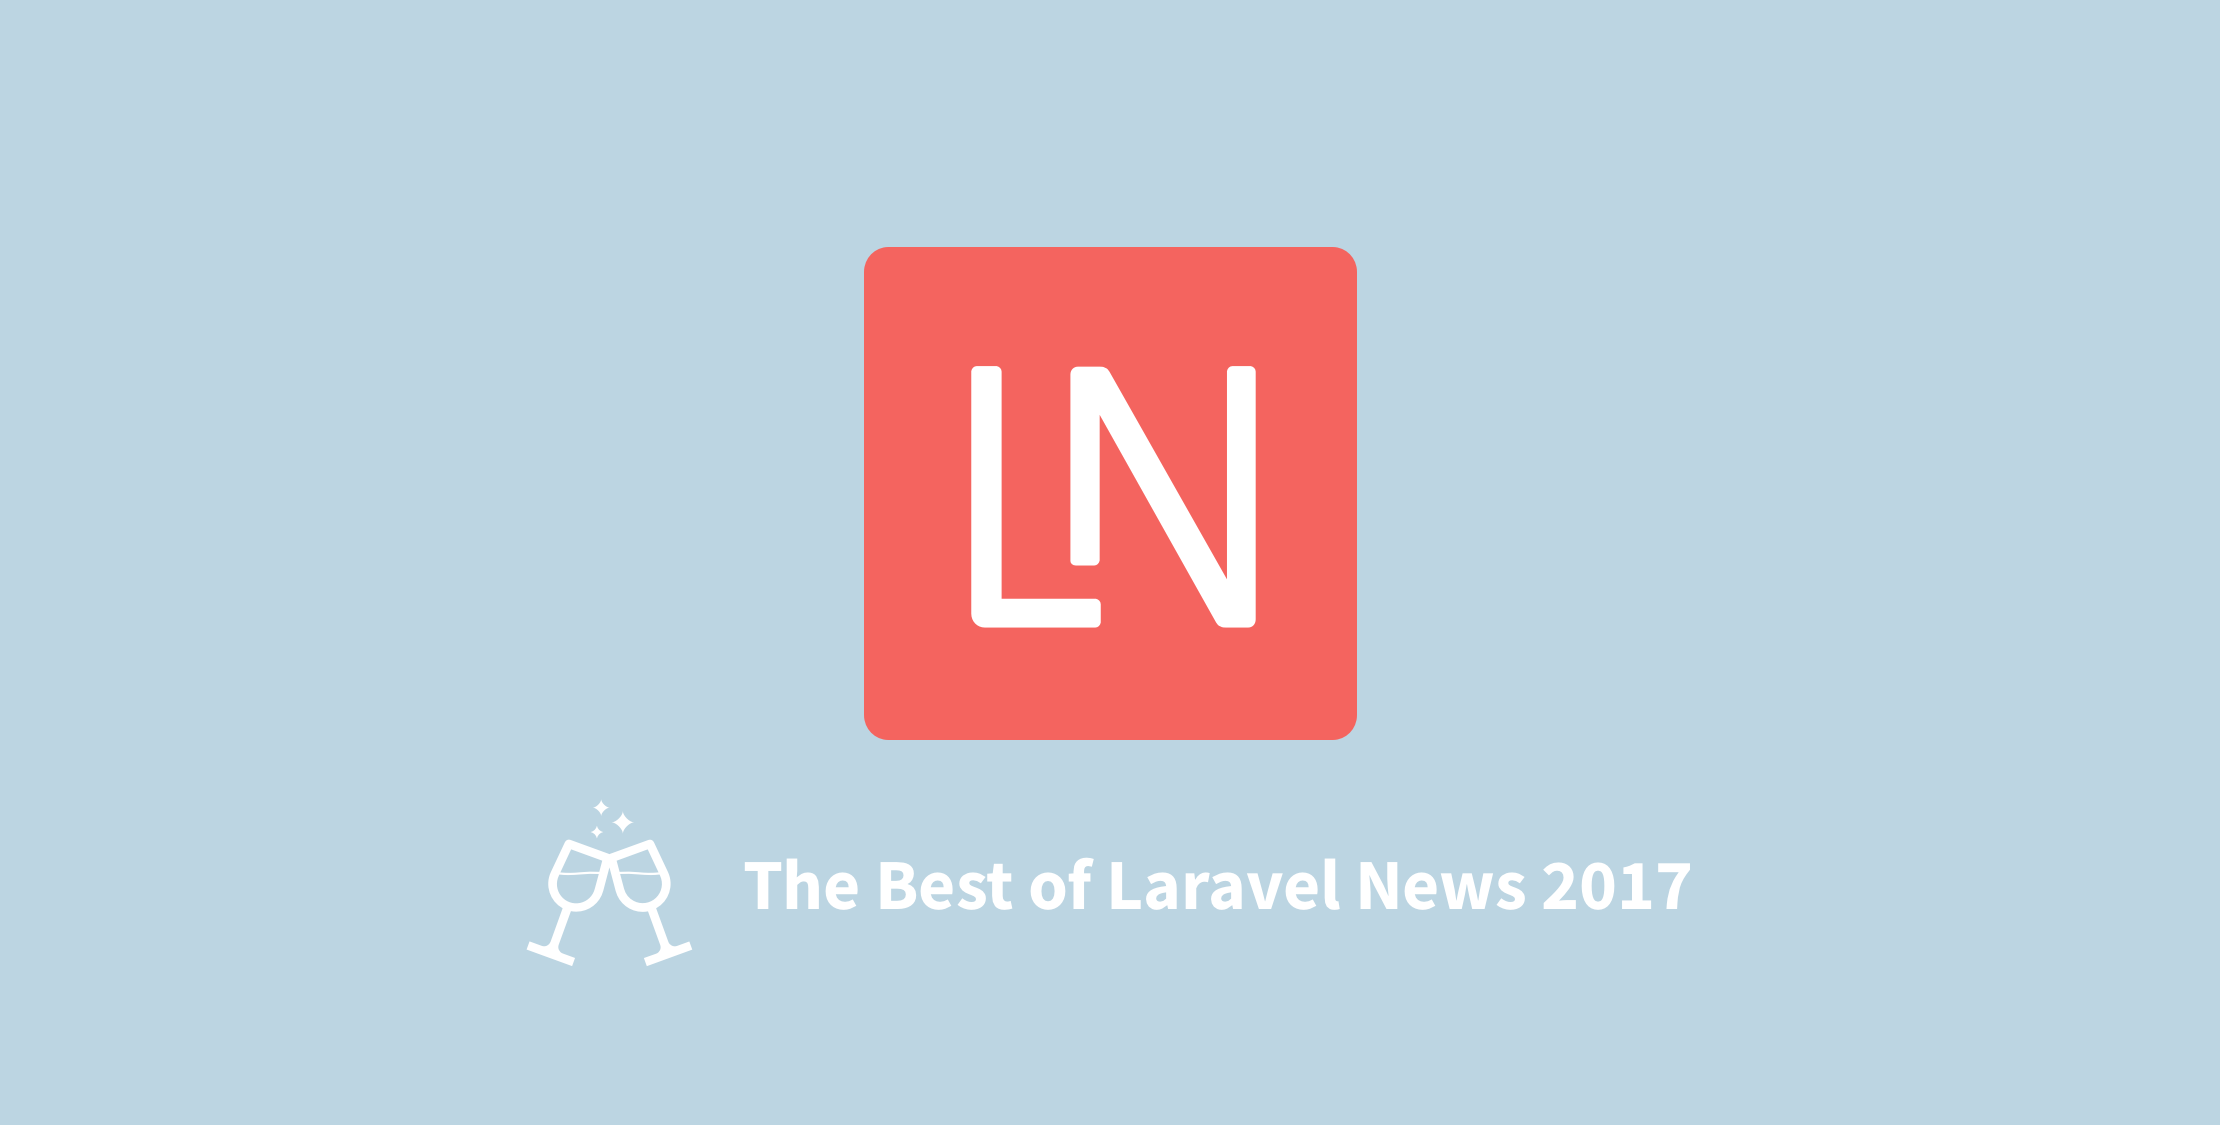 The Best of Laravel News 2017 image